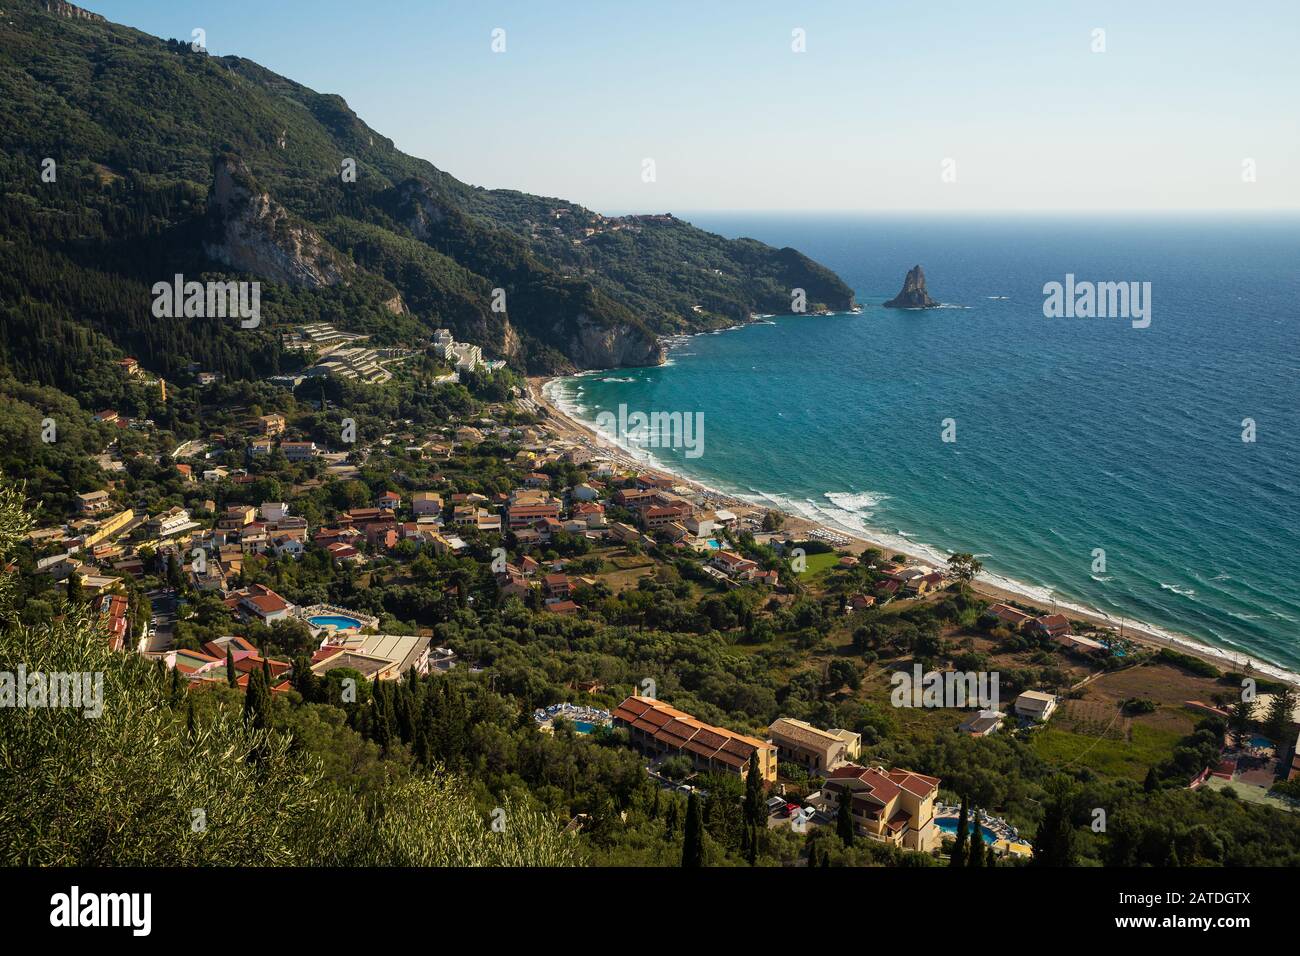 The mountainous coast of the Greek island of Corfu on the Ionian sea Stock Photo